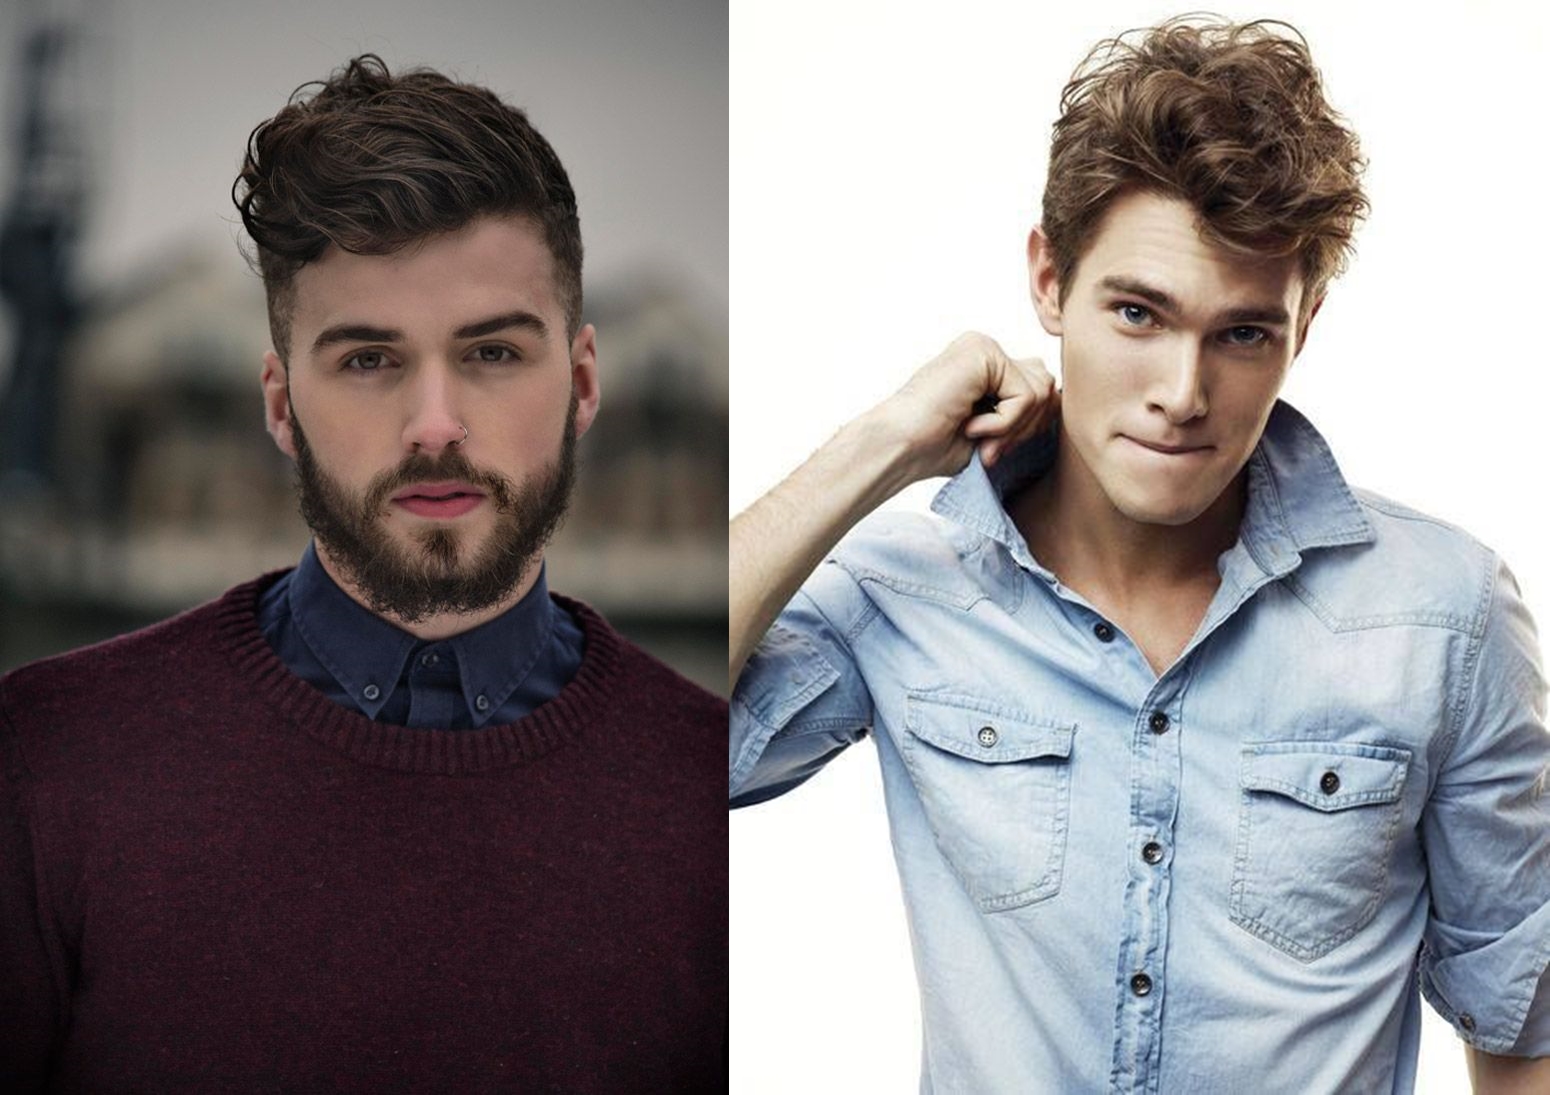 Moda masculina: tendências em corte de cabelo masculino!